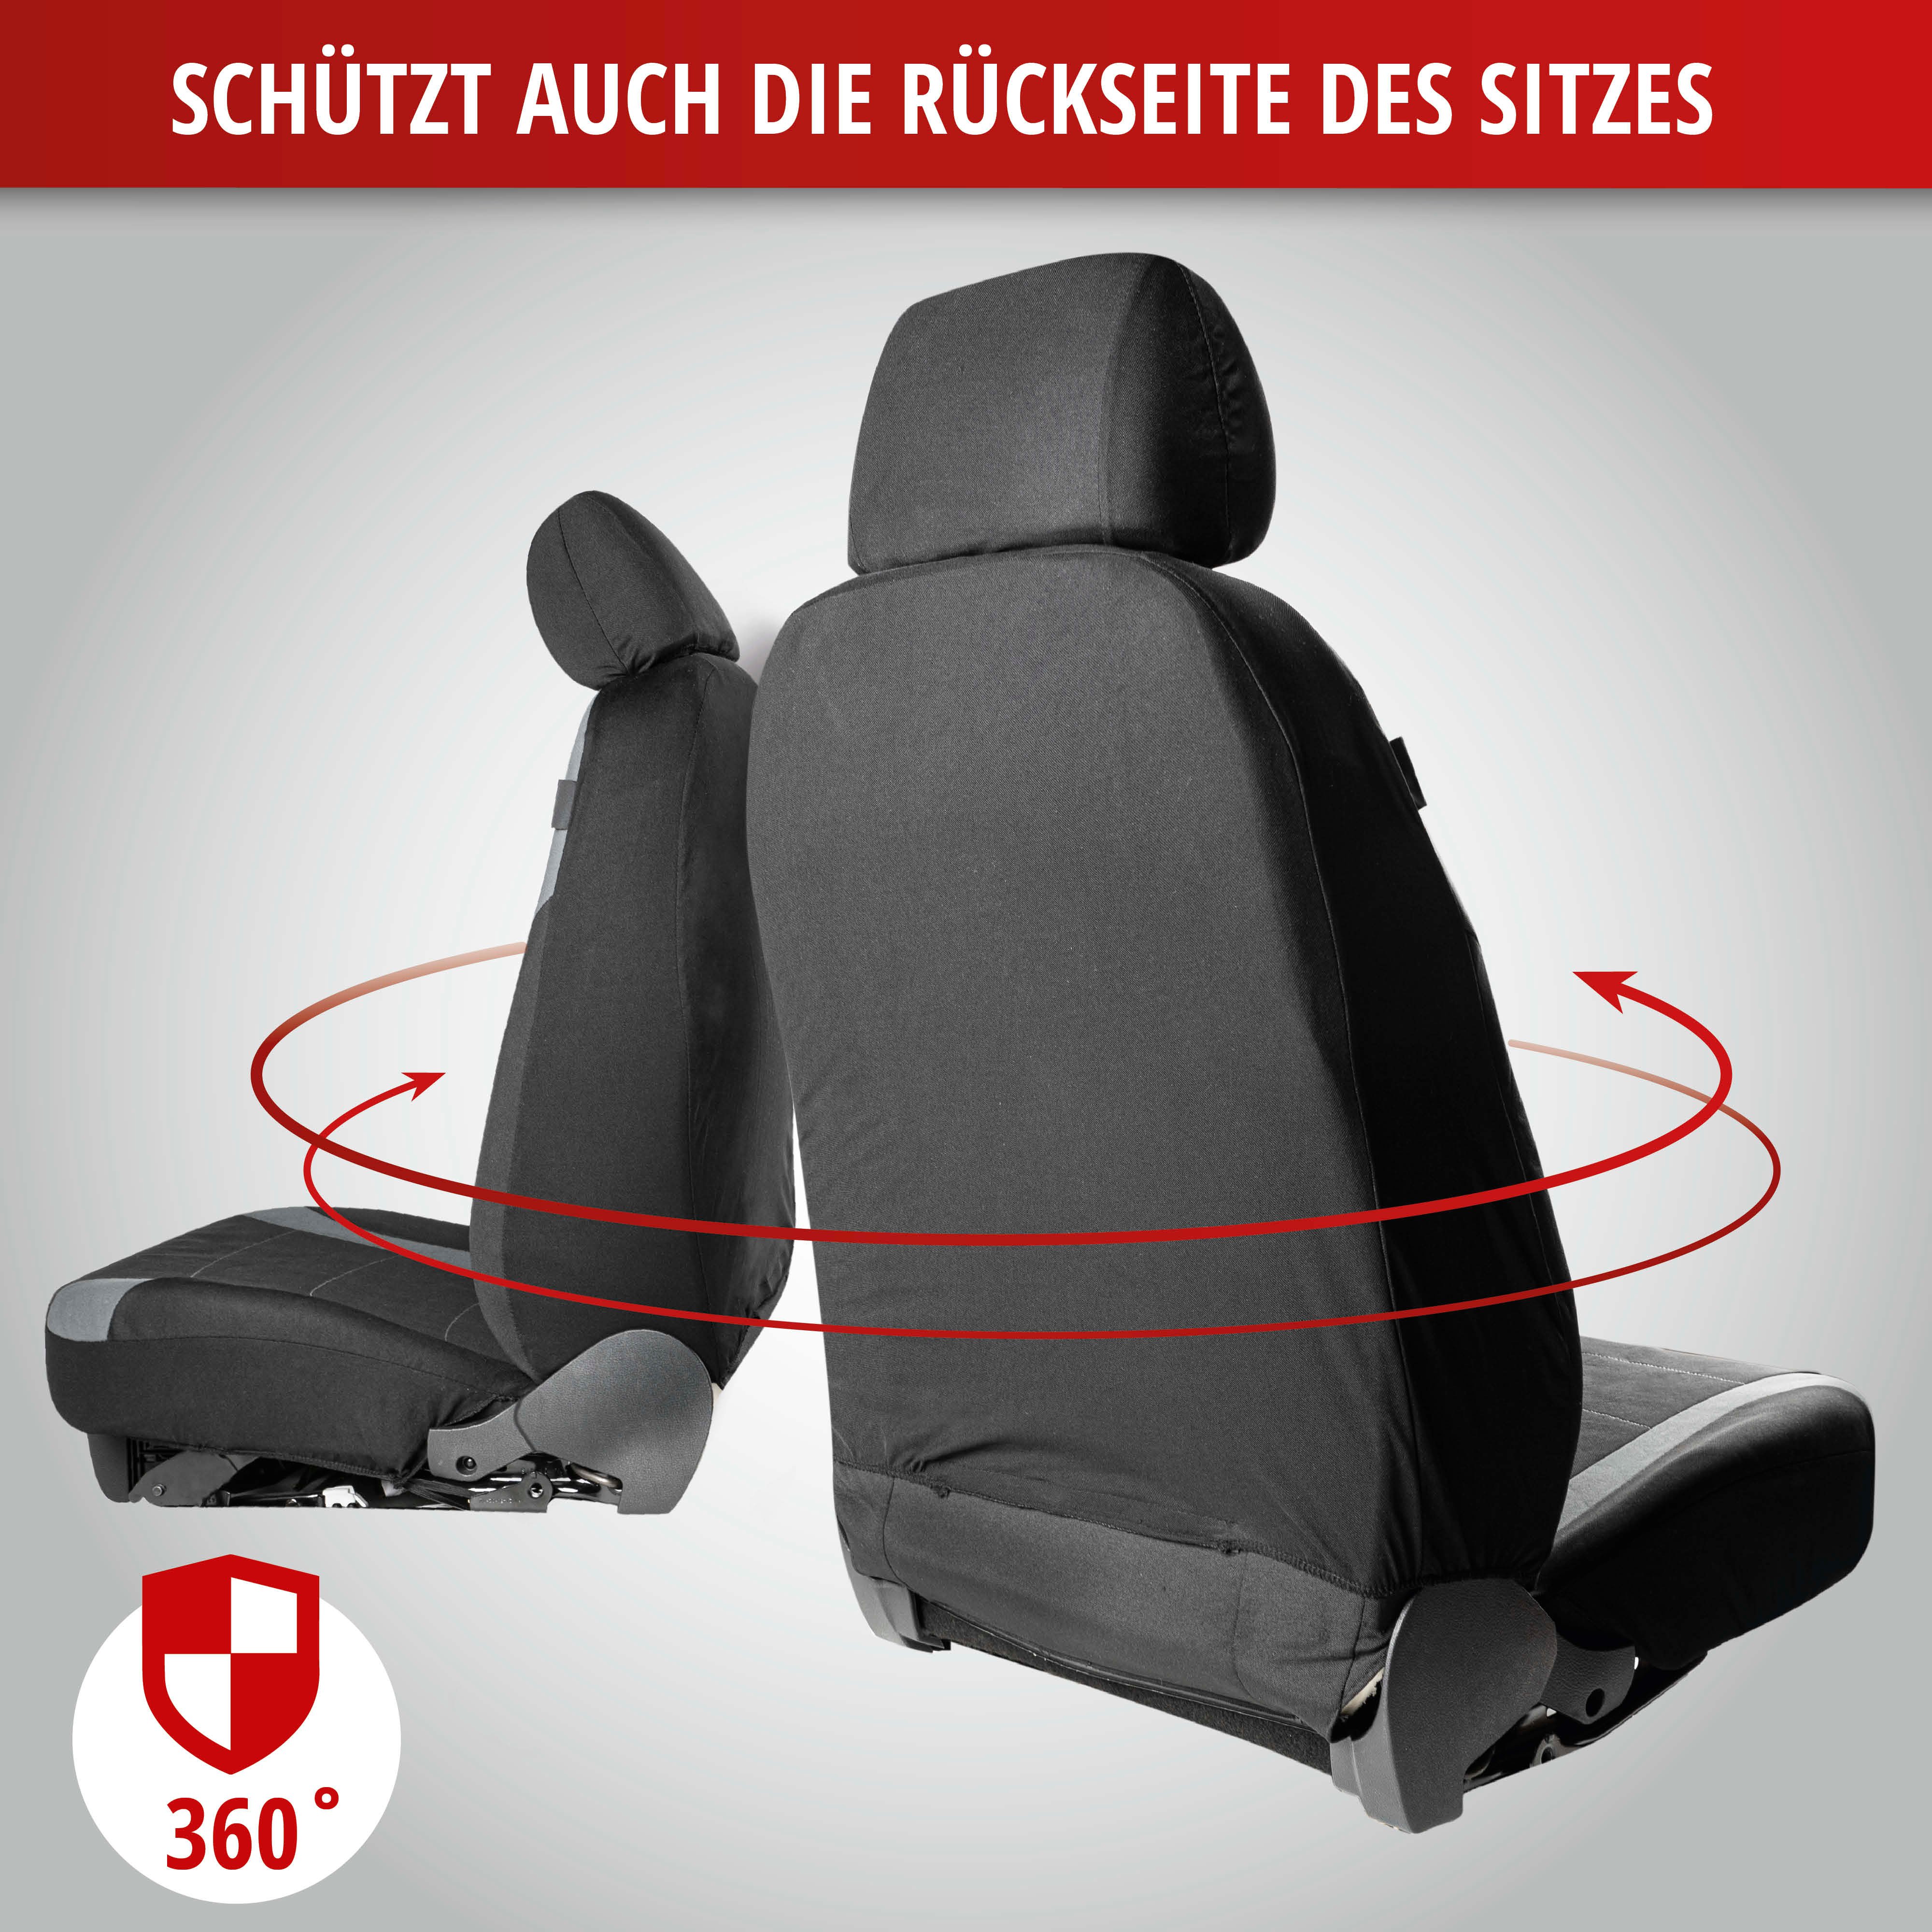 ZIPP IT Premium Inde Auto Sitzbezug mit Reissverschluss System